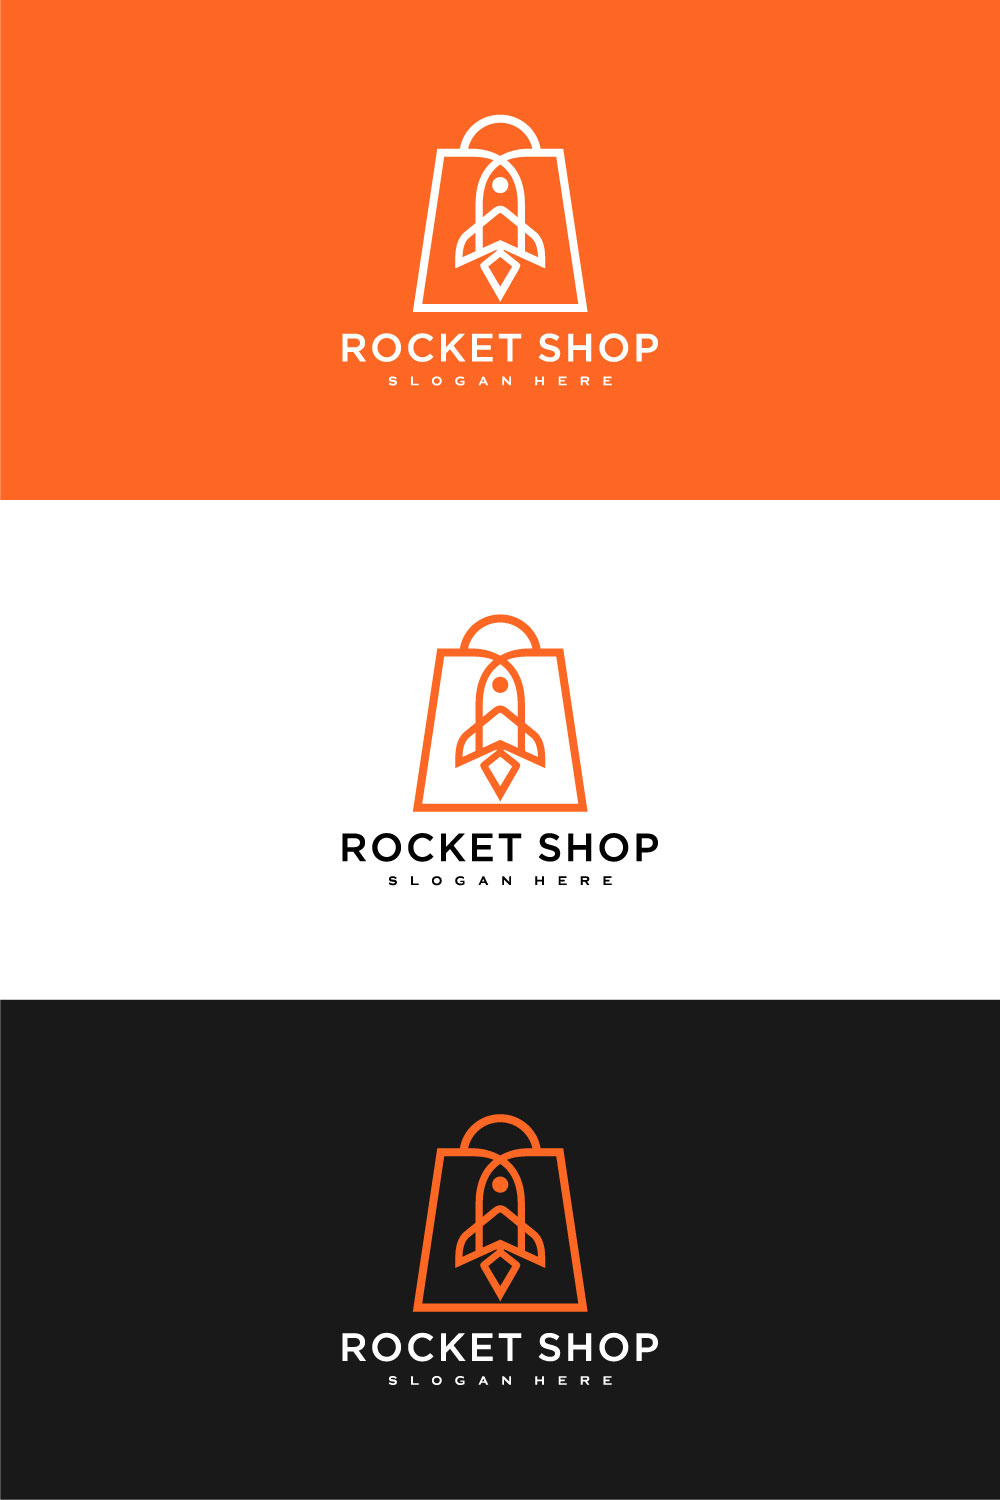 Rocket Shop Logo Design Vector pinterest.